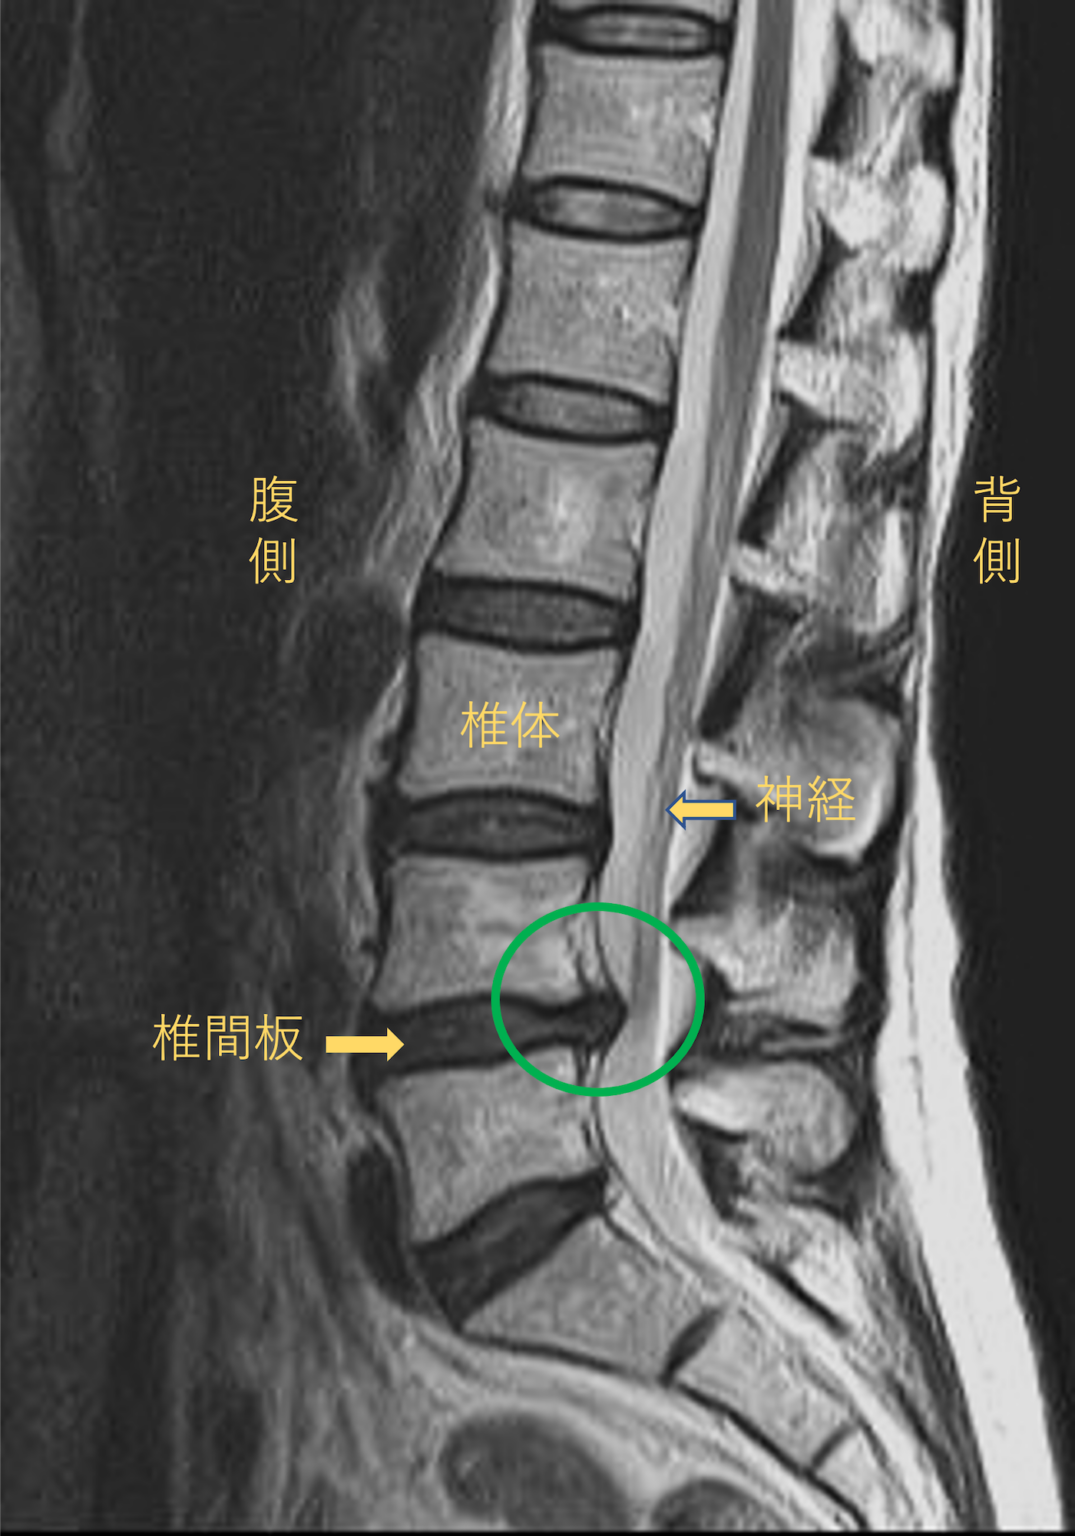 【PLDD法】2か月前から腰痛、左下肢の痛み、しびれがある50代女性【治療実績】 医療あれこれ日記 椎間板ヘルニアのレーザー治療